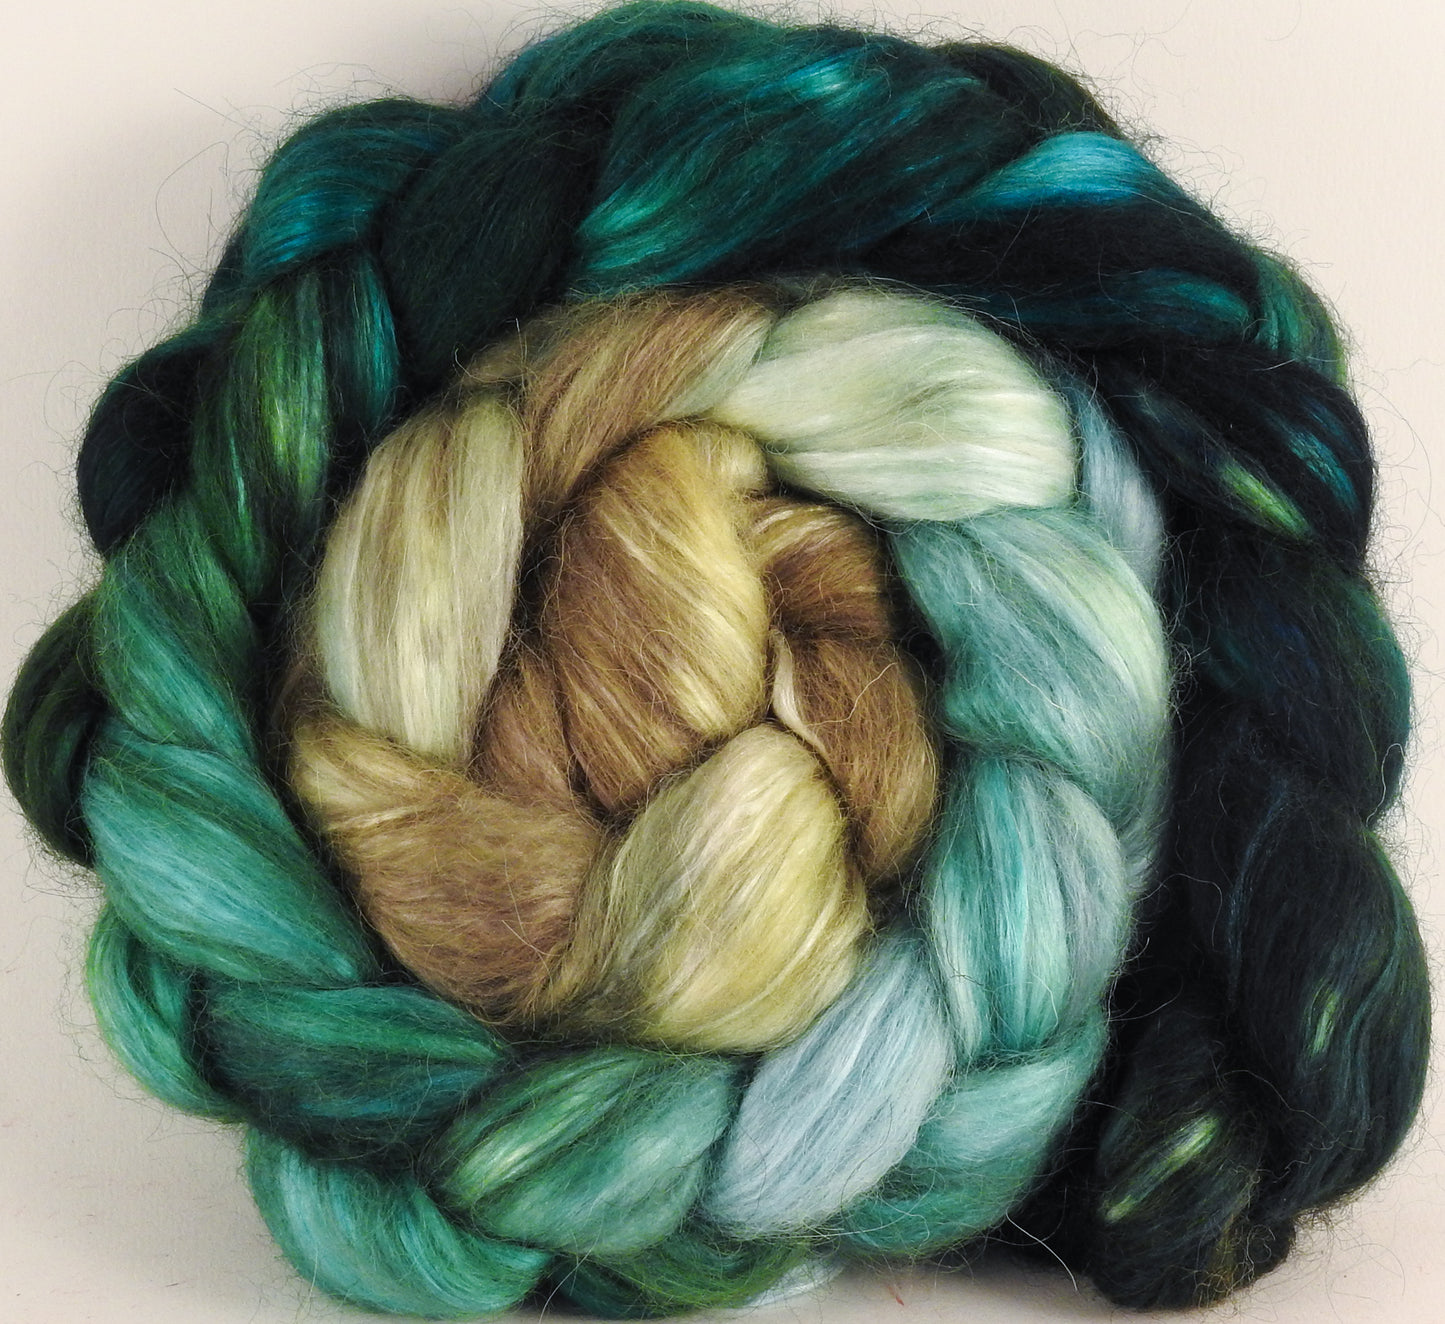 Hand-dyed wensleydale/ mulberry silk roving (65/35) - Aventurine - (5.3 oz.) - Inglenook Fibers